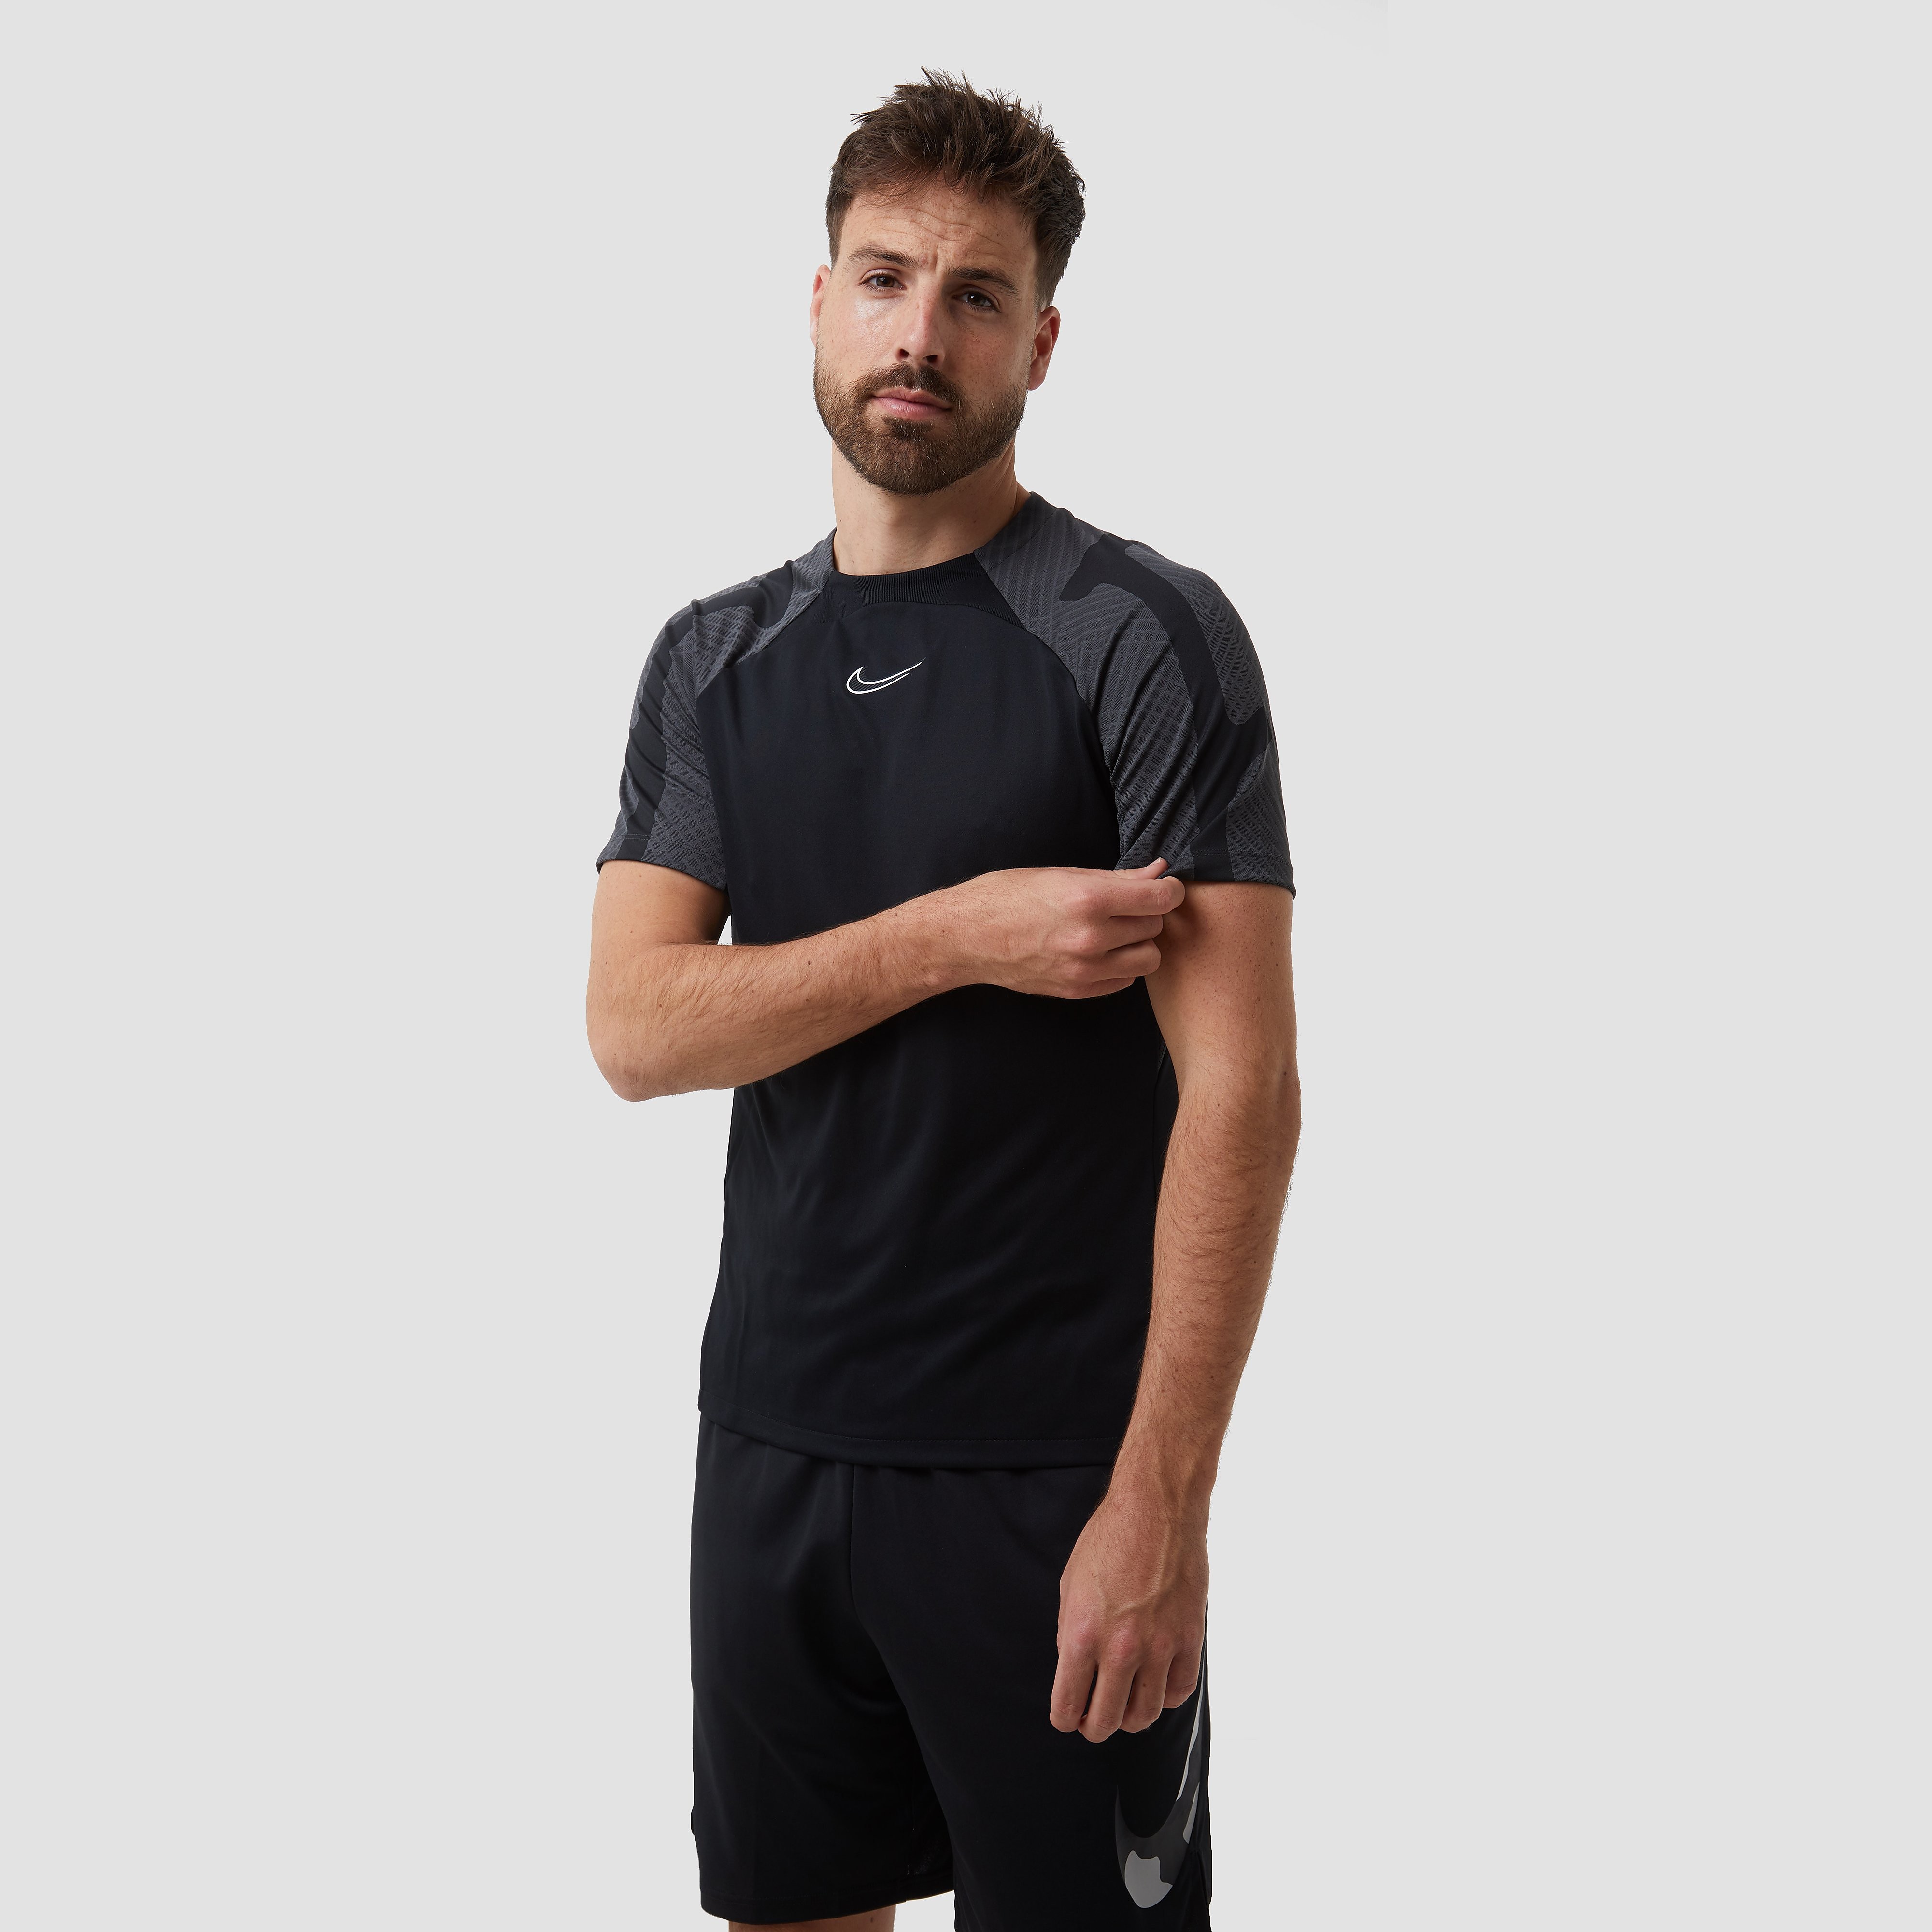 Nike Nike dri-fit strike voetbalshirt zwart/grijs heren heren